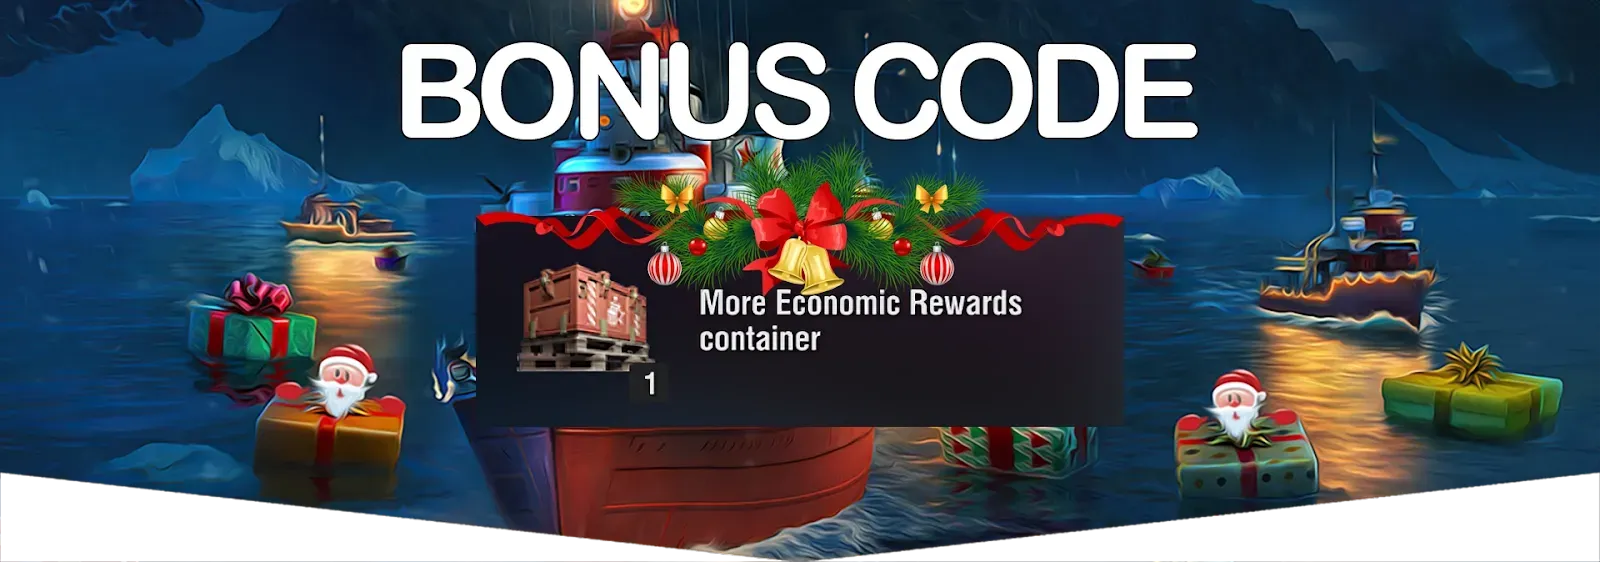 Image of Bonus Code header banner